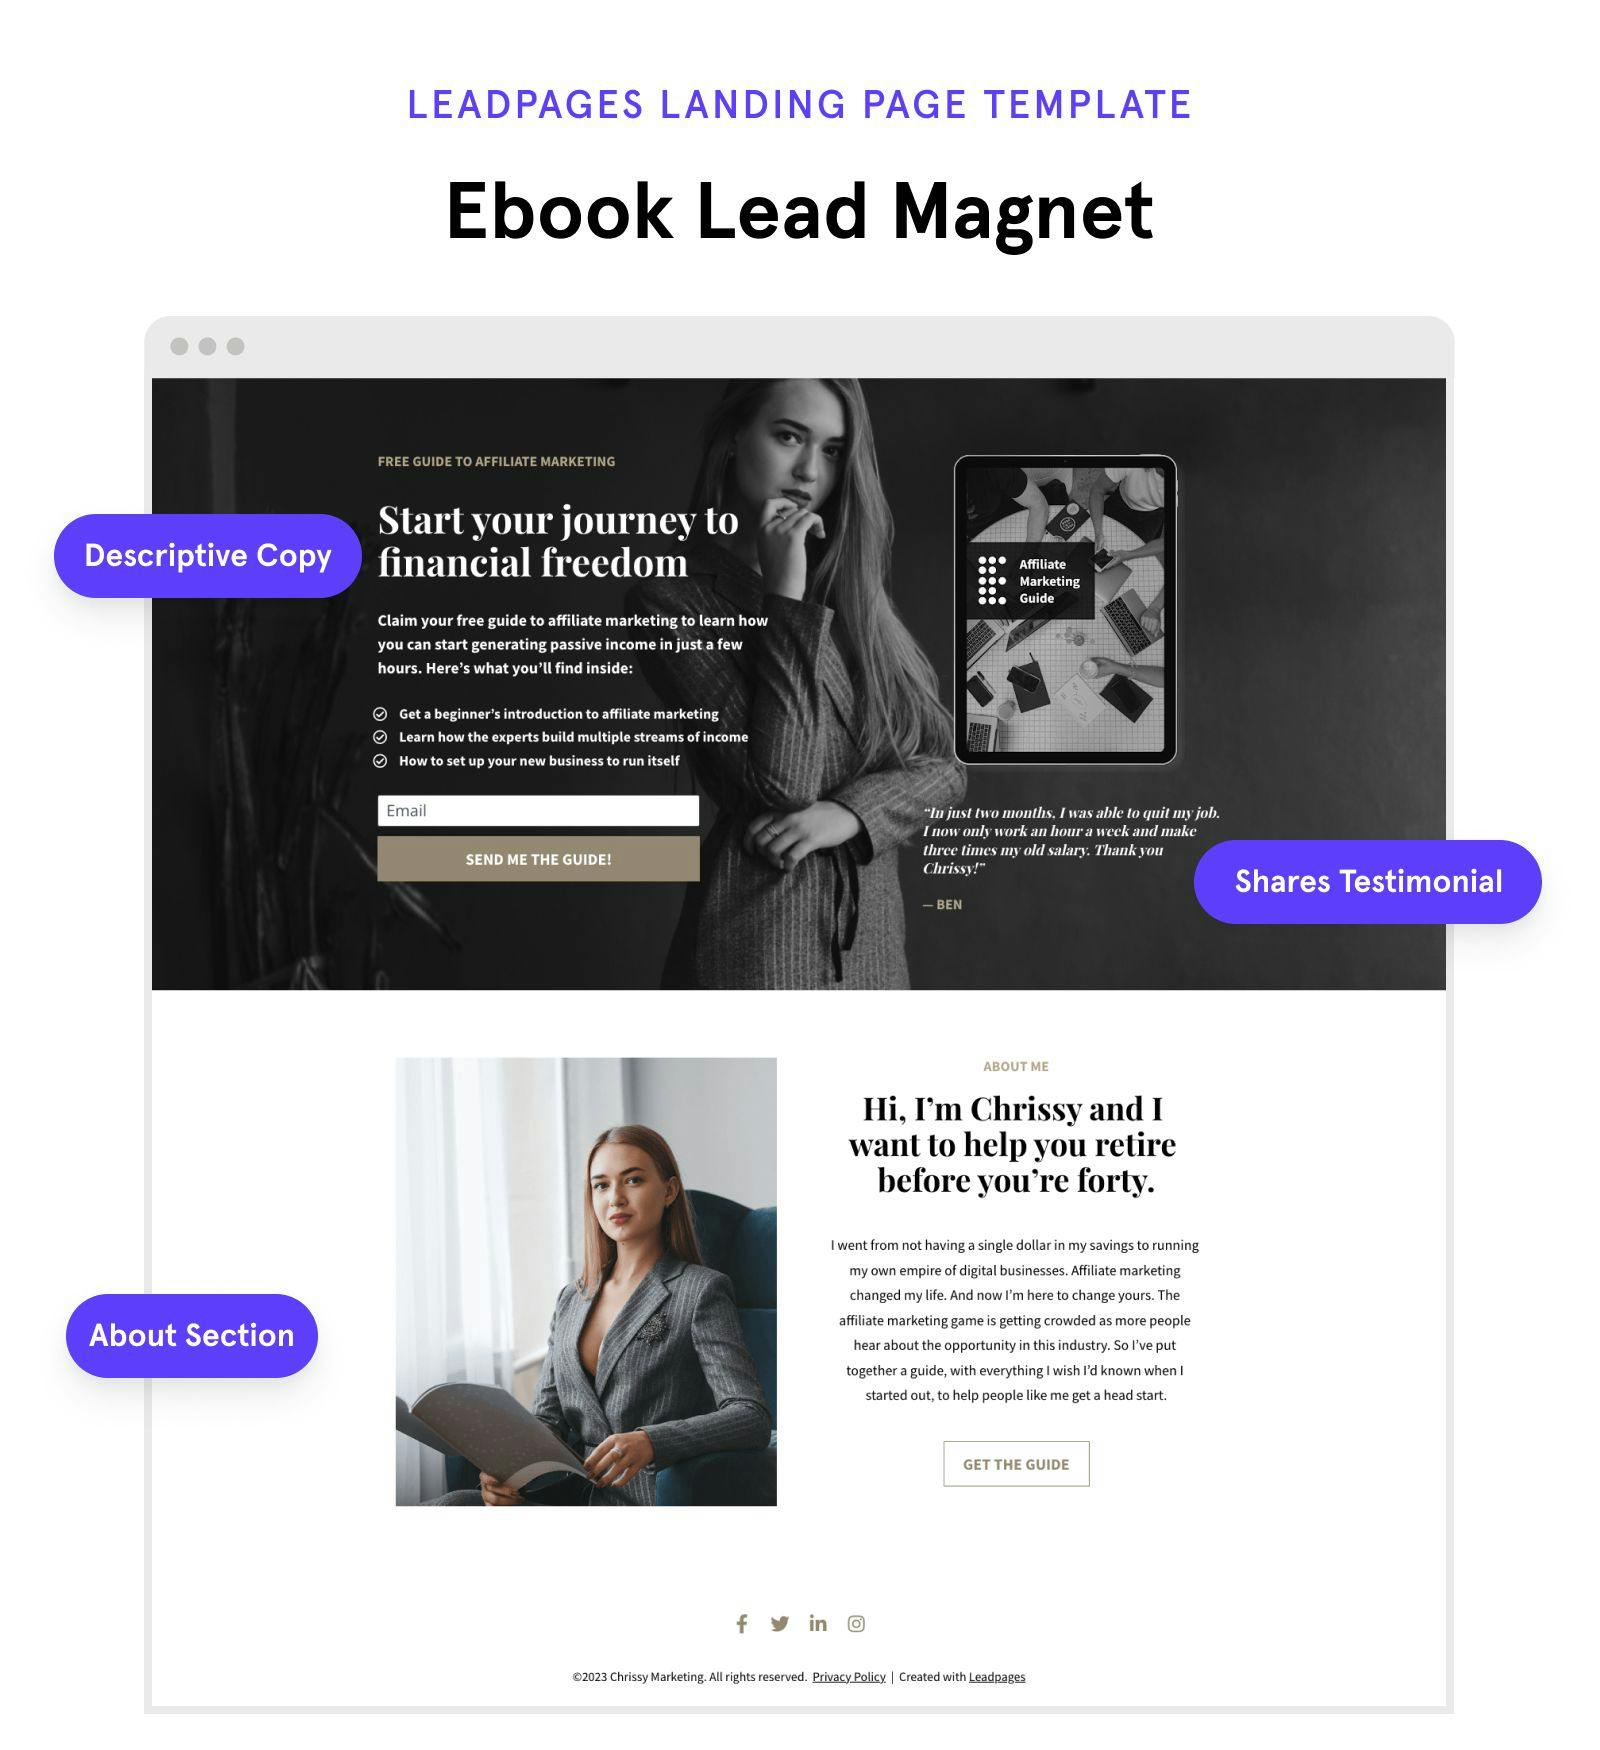 Ebook lead magnet landing page template